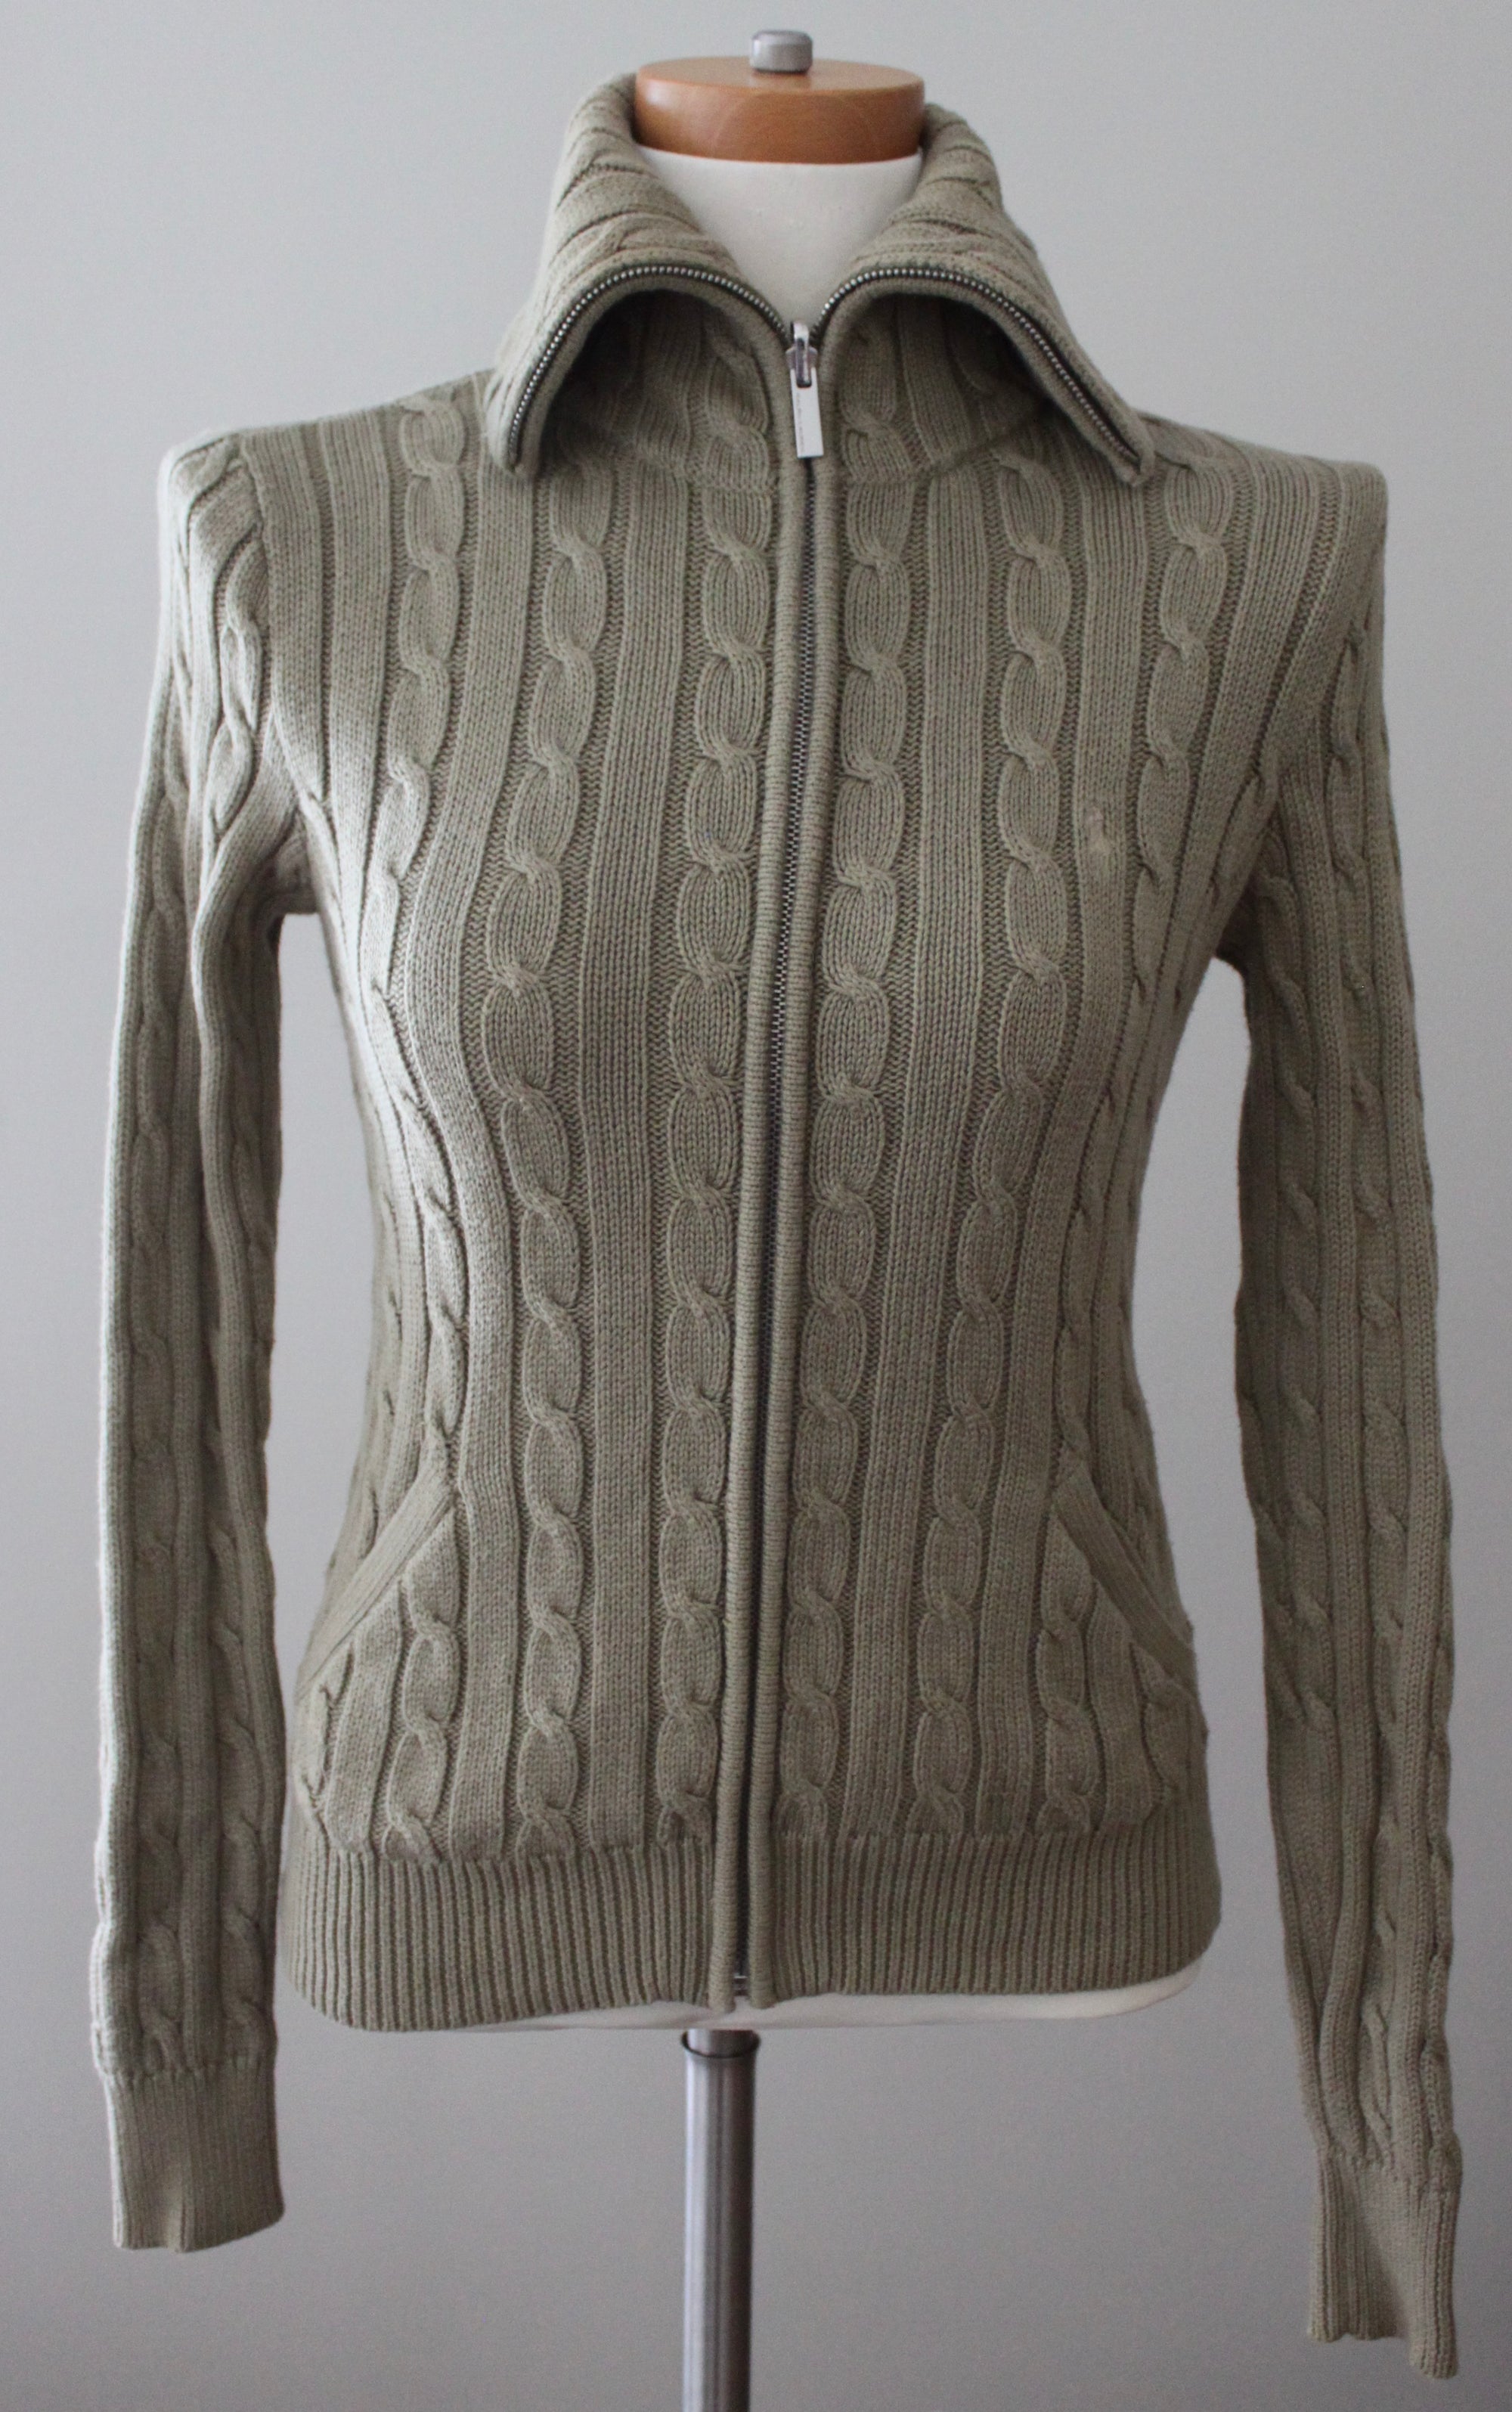 RALPH LAUREN SPORT Soft Autumn cable knit zip sweater